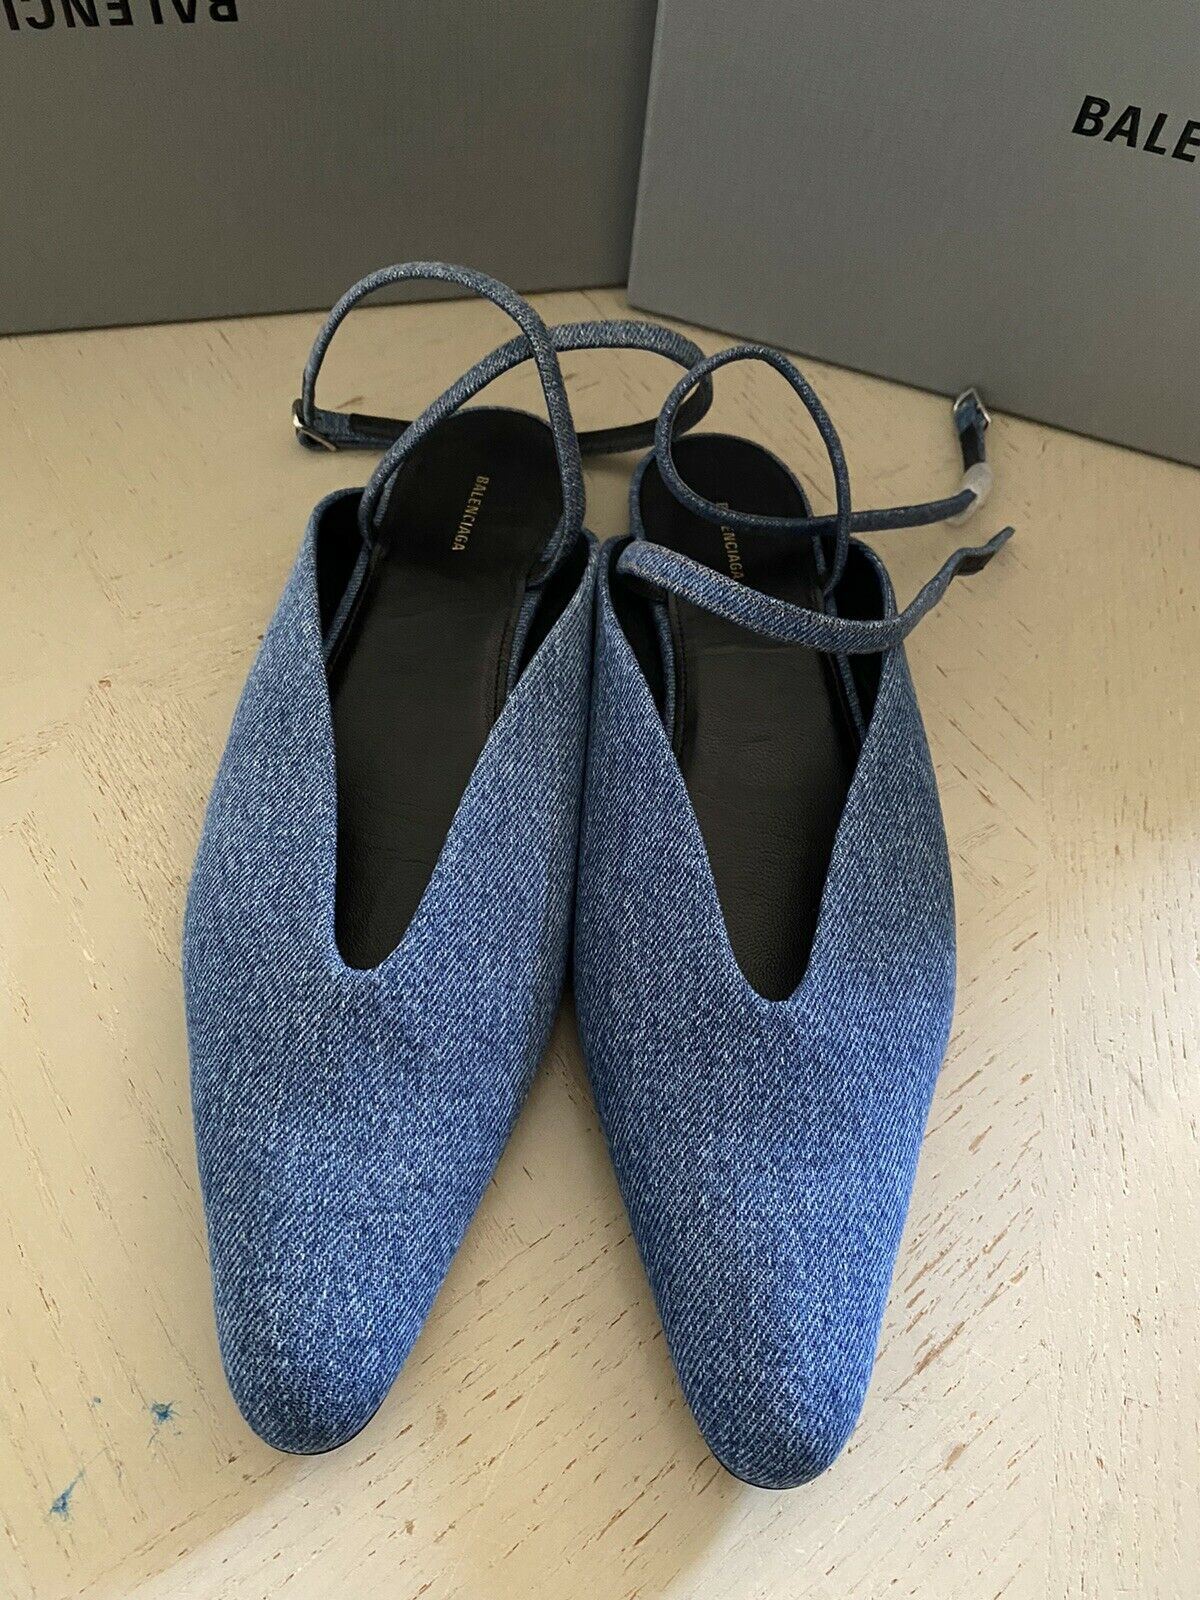 NIB $650 Balenciaga Ankle-Strap Denim Flat Sandal Shoes Blue 9.5 US/39.5 E Italy